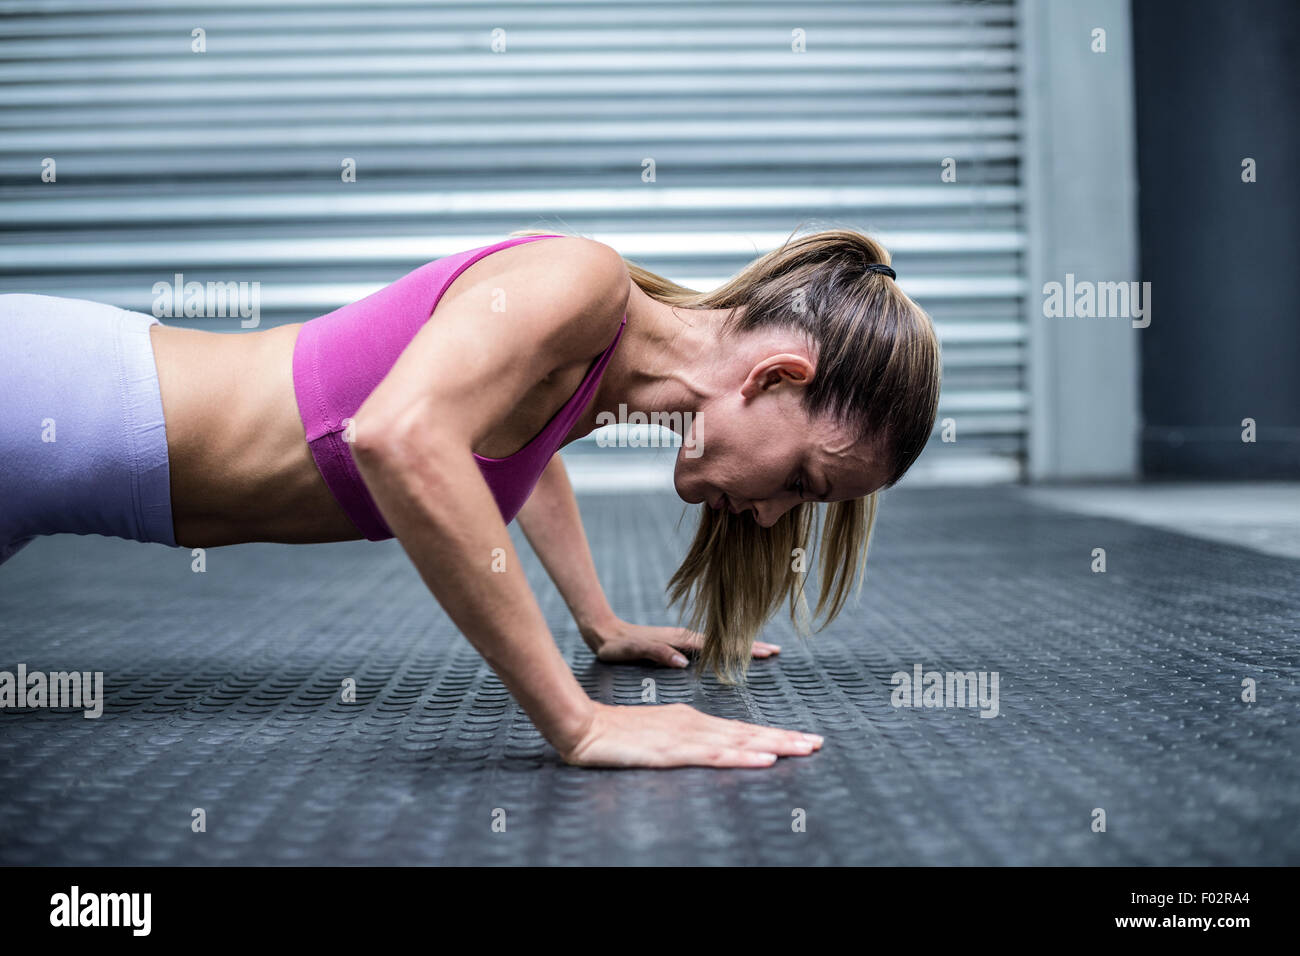 Muscular woman doing push ups Stock Photo